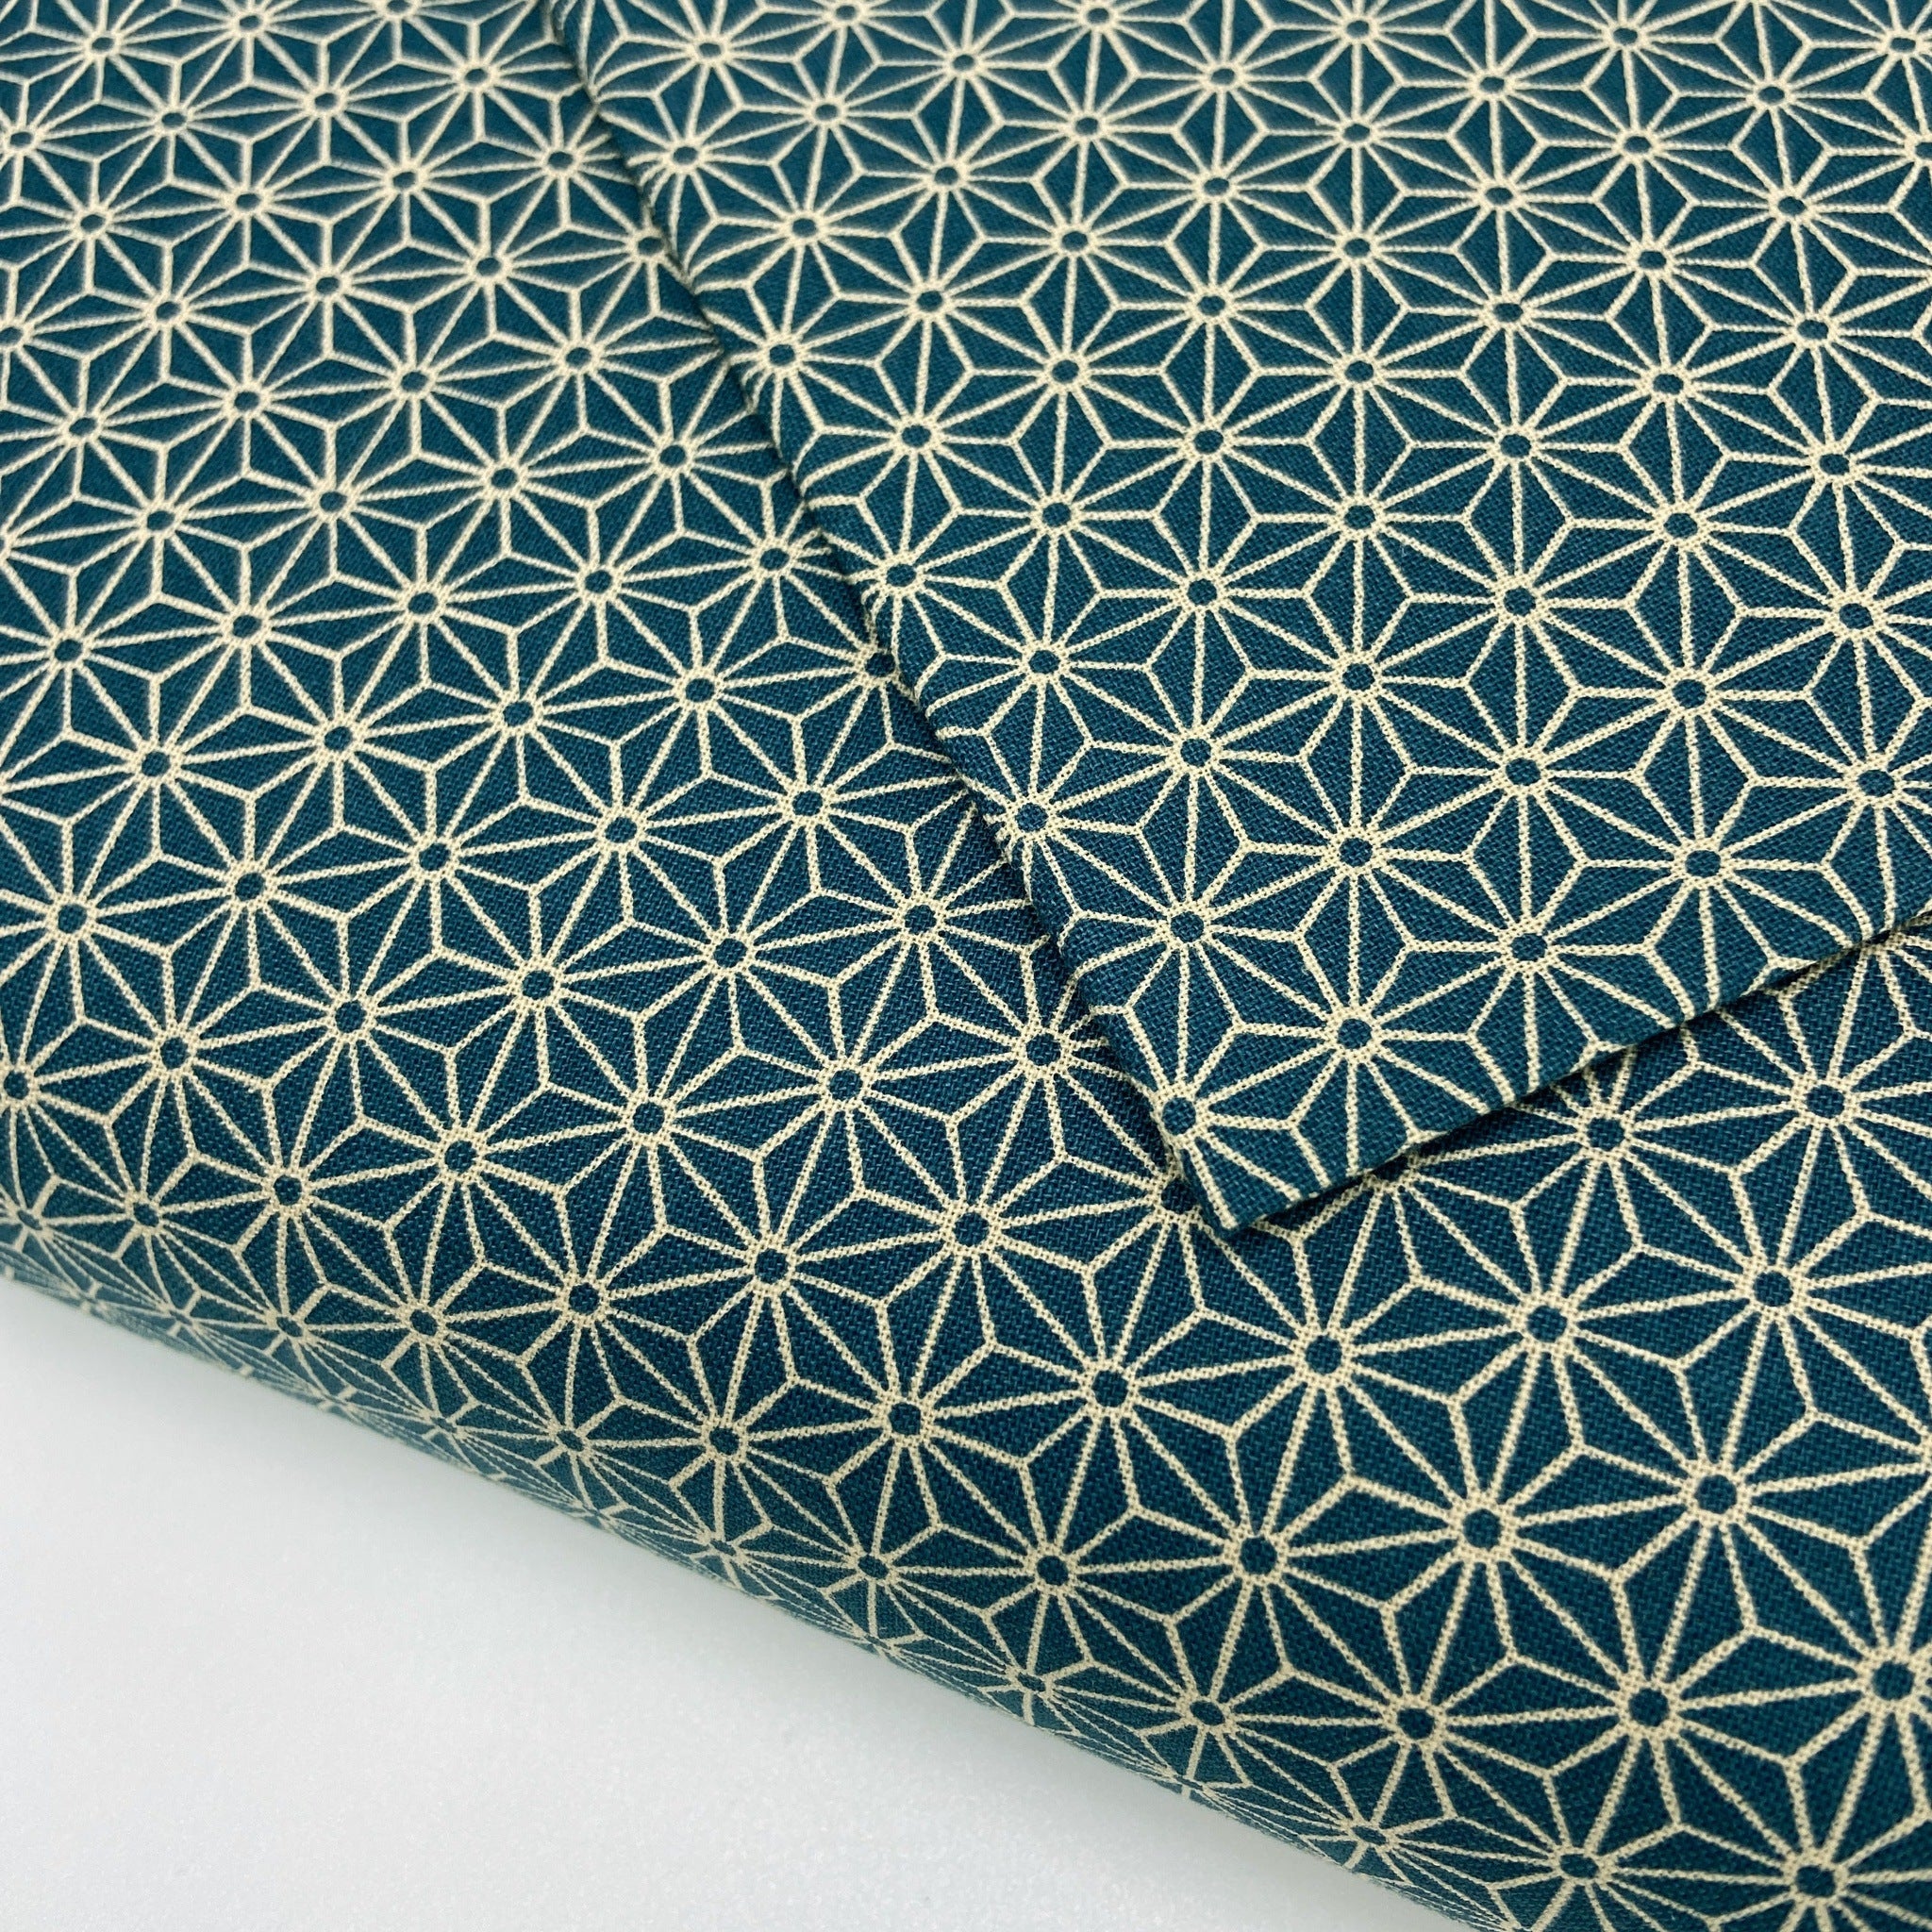 Japanese Cotton Sheeting Print - Hemp Leaves Blue